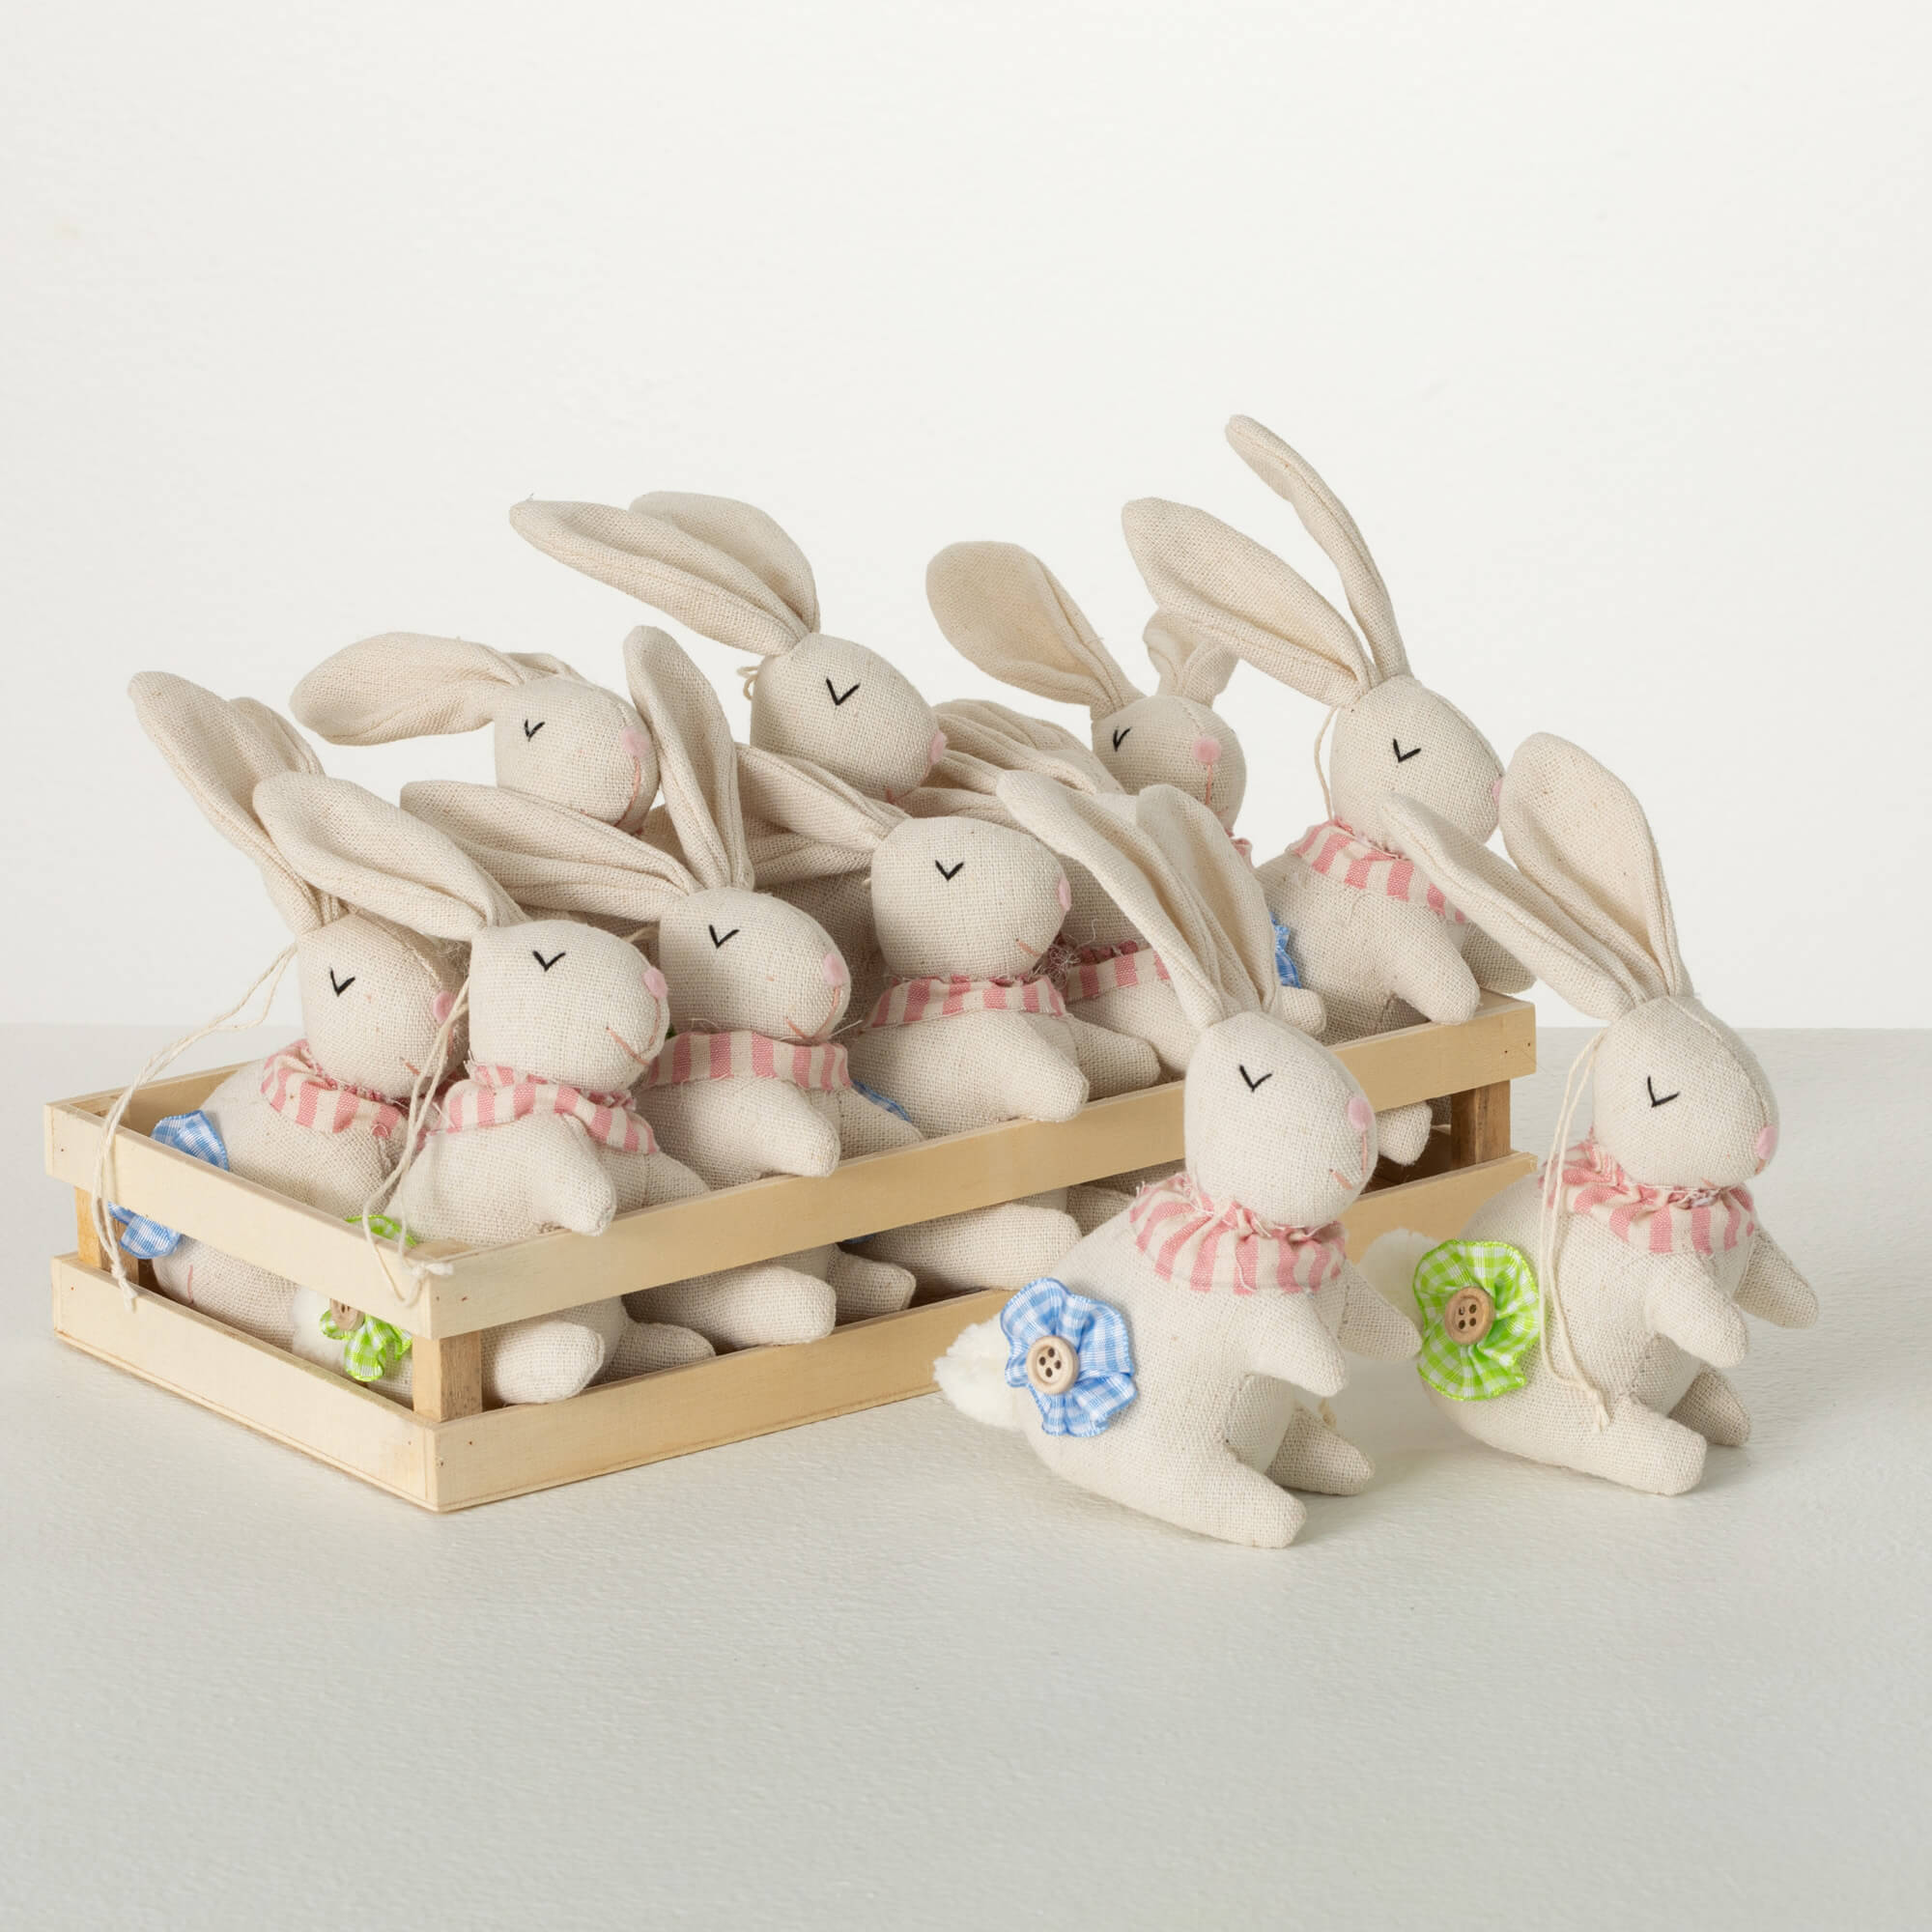 Mini Bunny Figurines Elevate Home Decor - Figurines